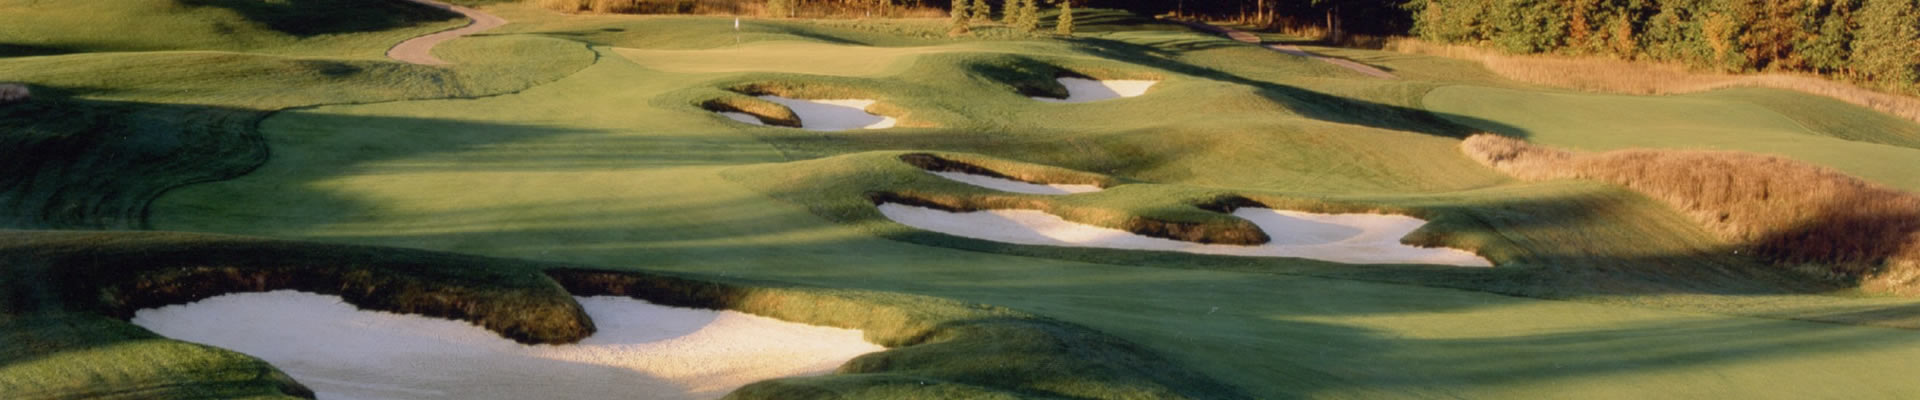 rochester golf courses header